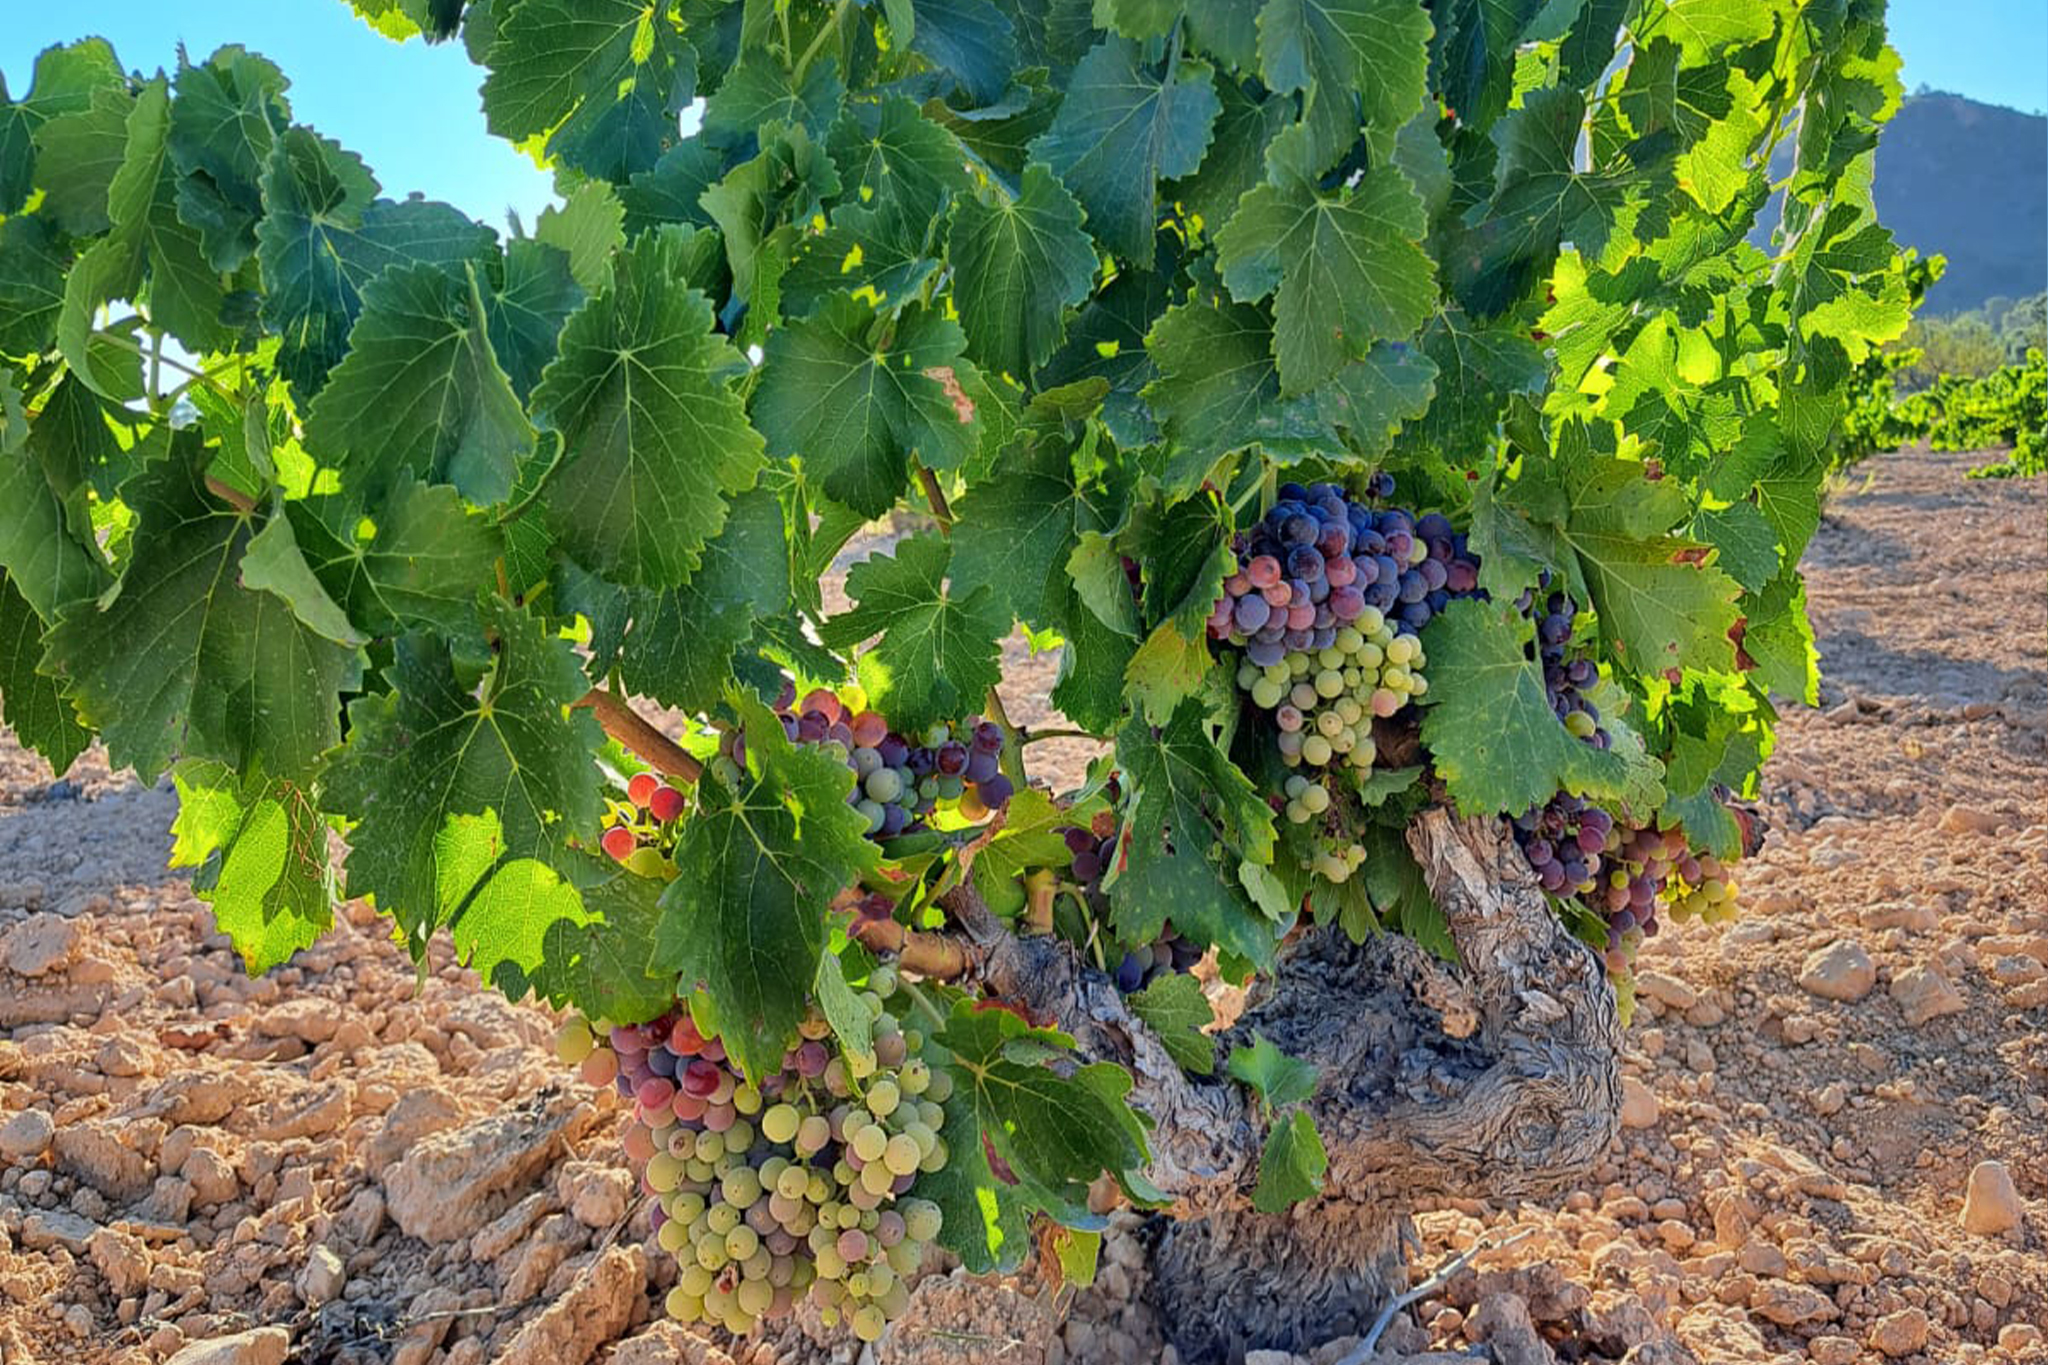 Grapes maturing on old vine